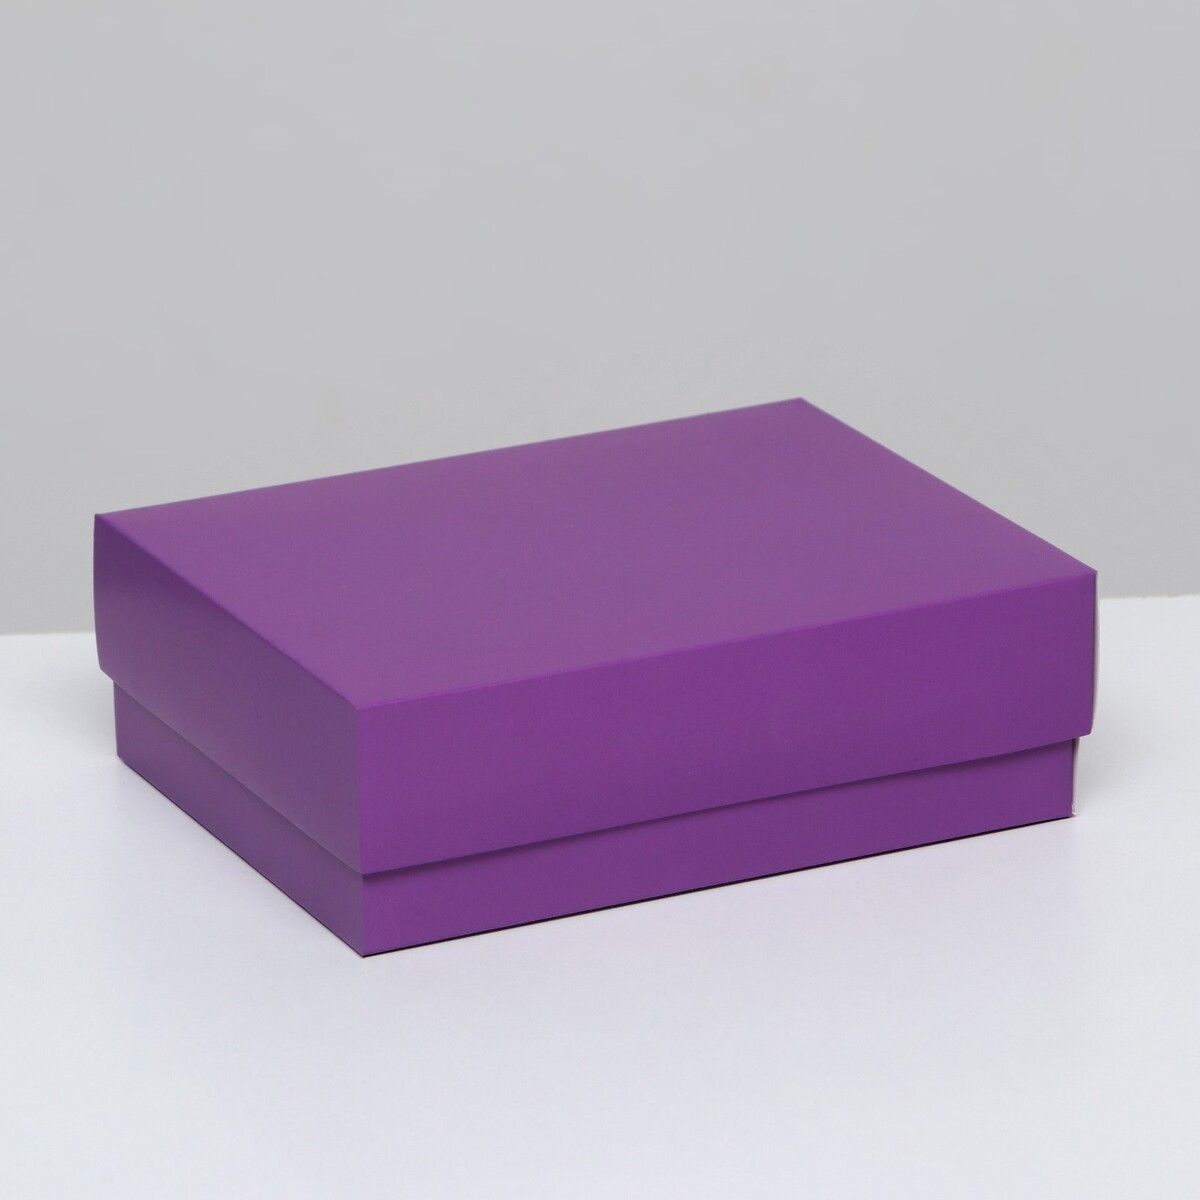 Коробка складная, сиреневая, 16,5 х 12,5 х 5,2 см UPAK LAND, цвет сиреневый 05248002 - фото 1